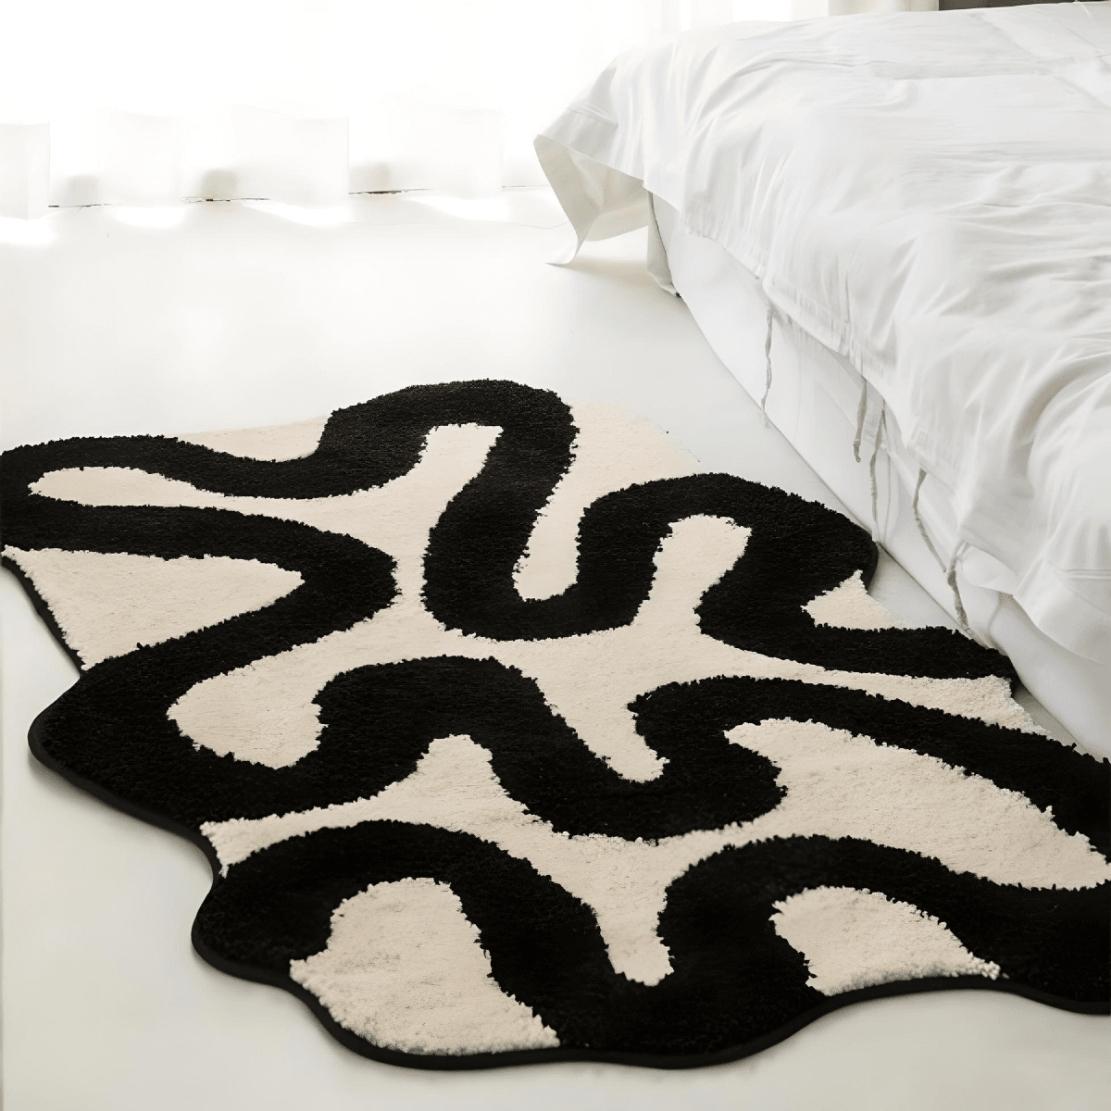 Black asymmetrical line art floor carpet bedside rug